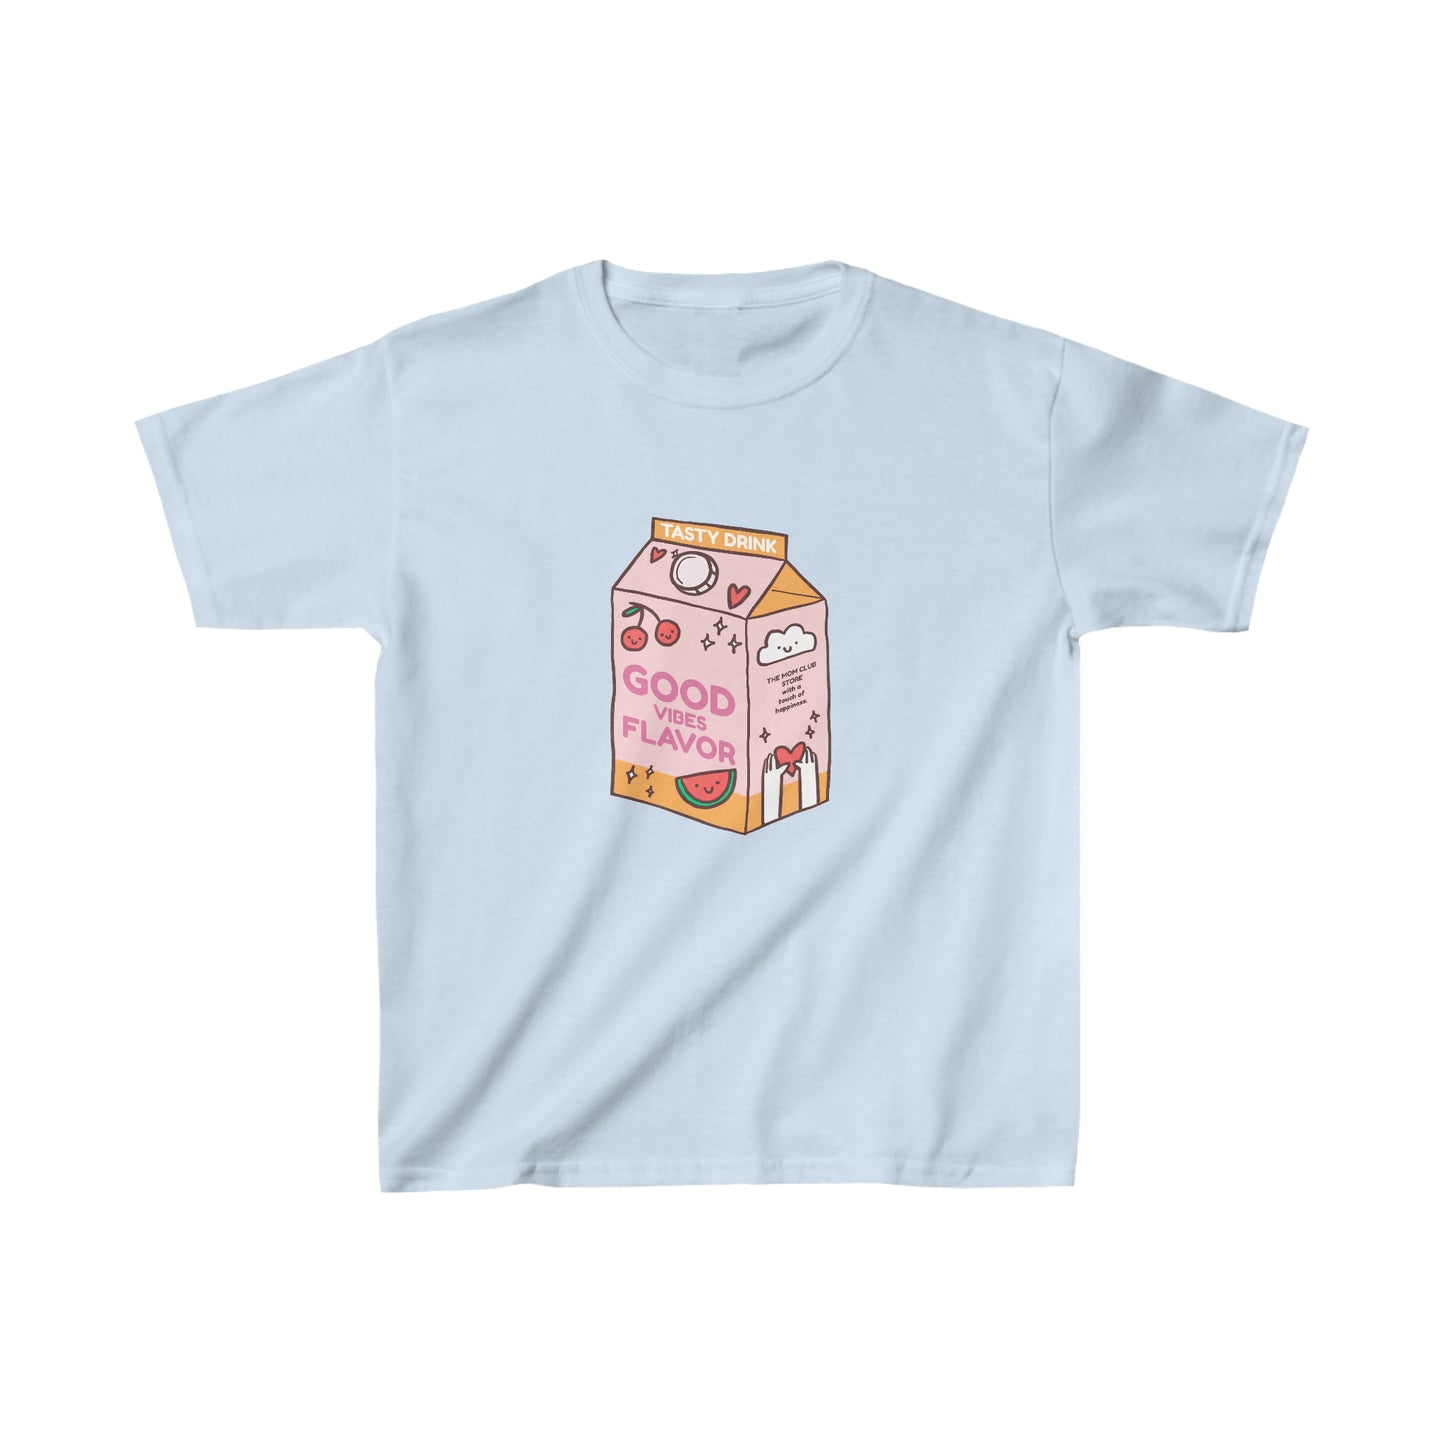 Kids' Unisex Printed Short-Sleeve T-Shirt